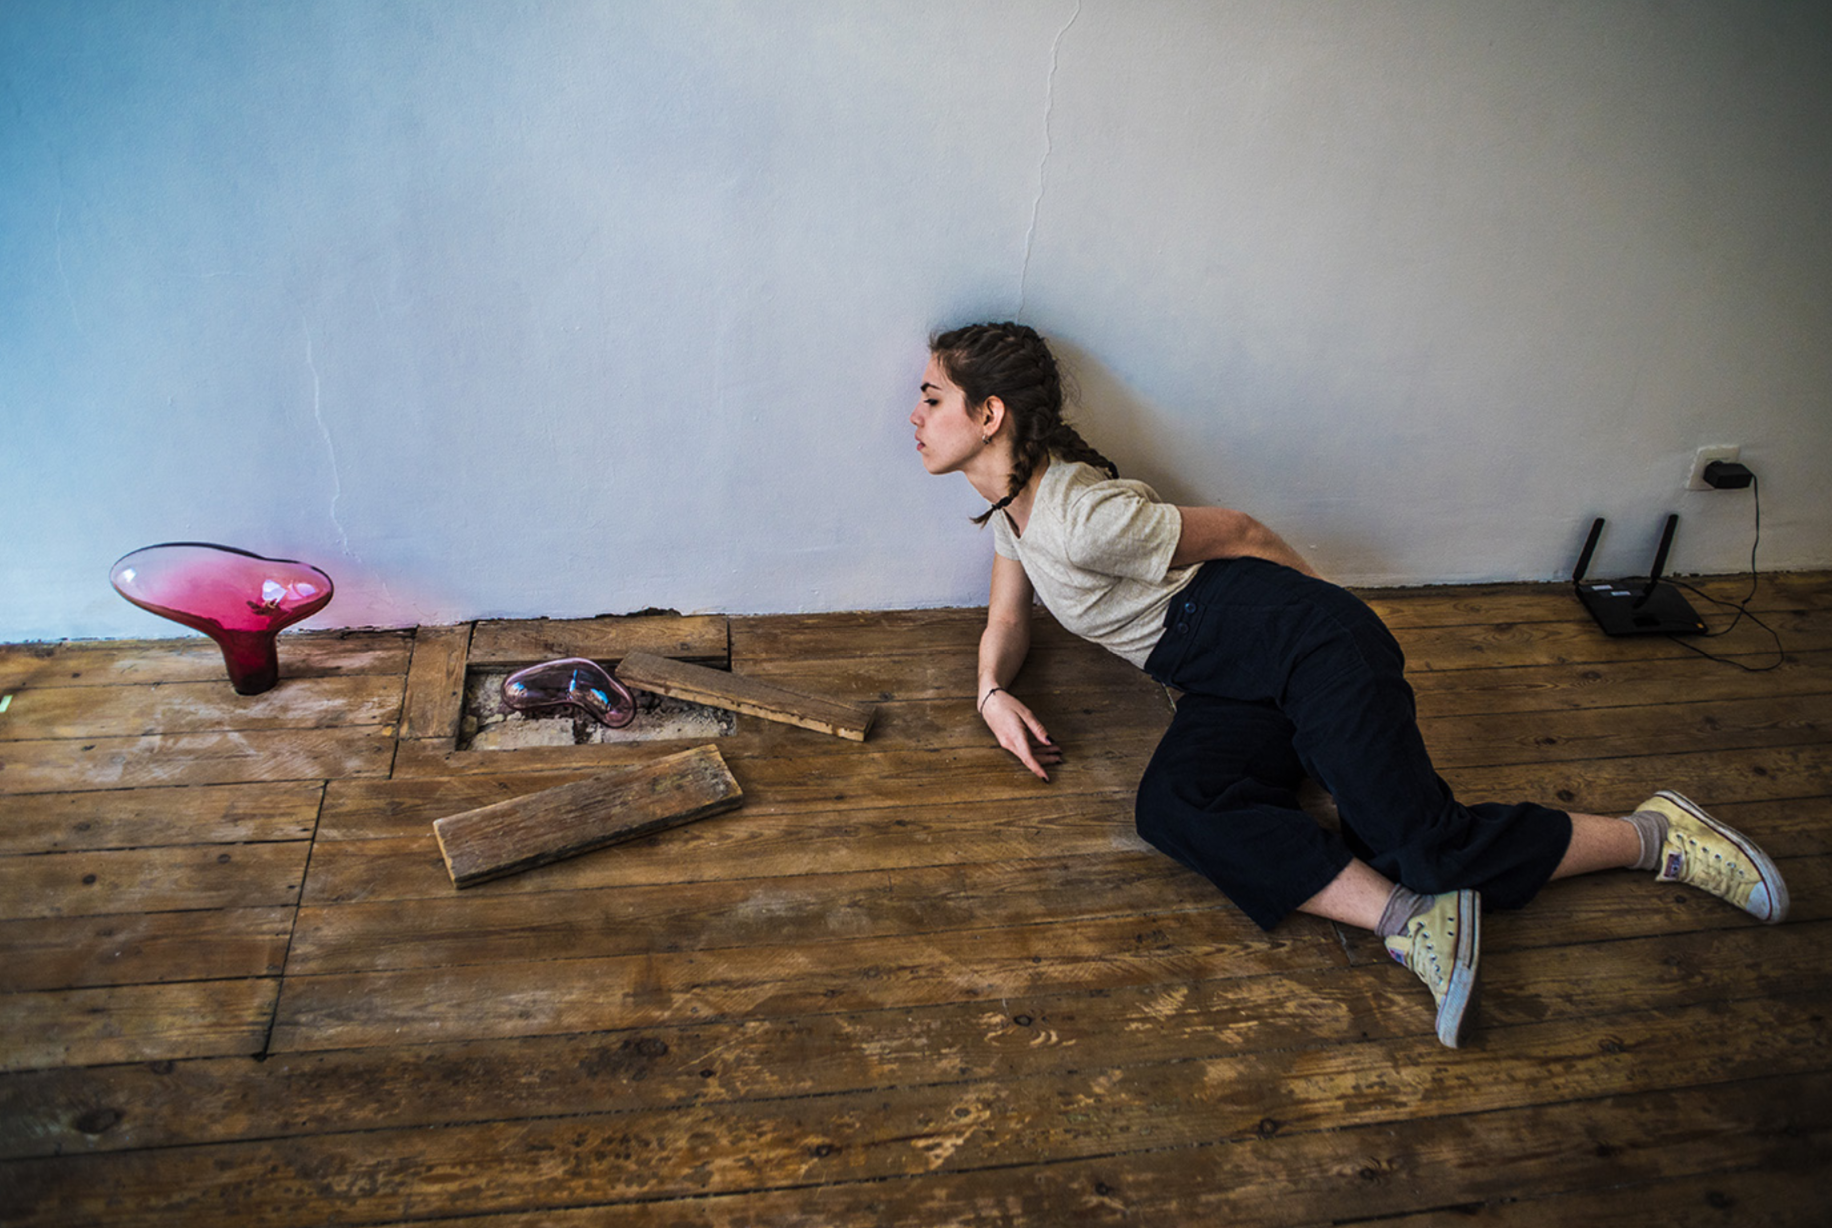 Performance de Giulia Bonfiglio dans le cadre de l'exposition "Light Matters" de Pepa Ivanova, Cunst-link 2019, co-curation Dounia Mojahid & Giulia Blasig